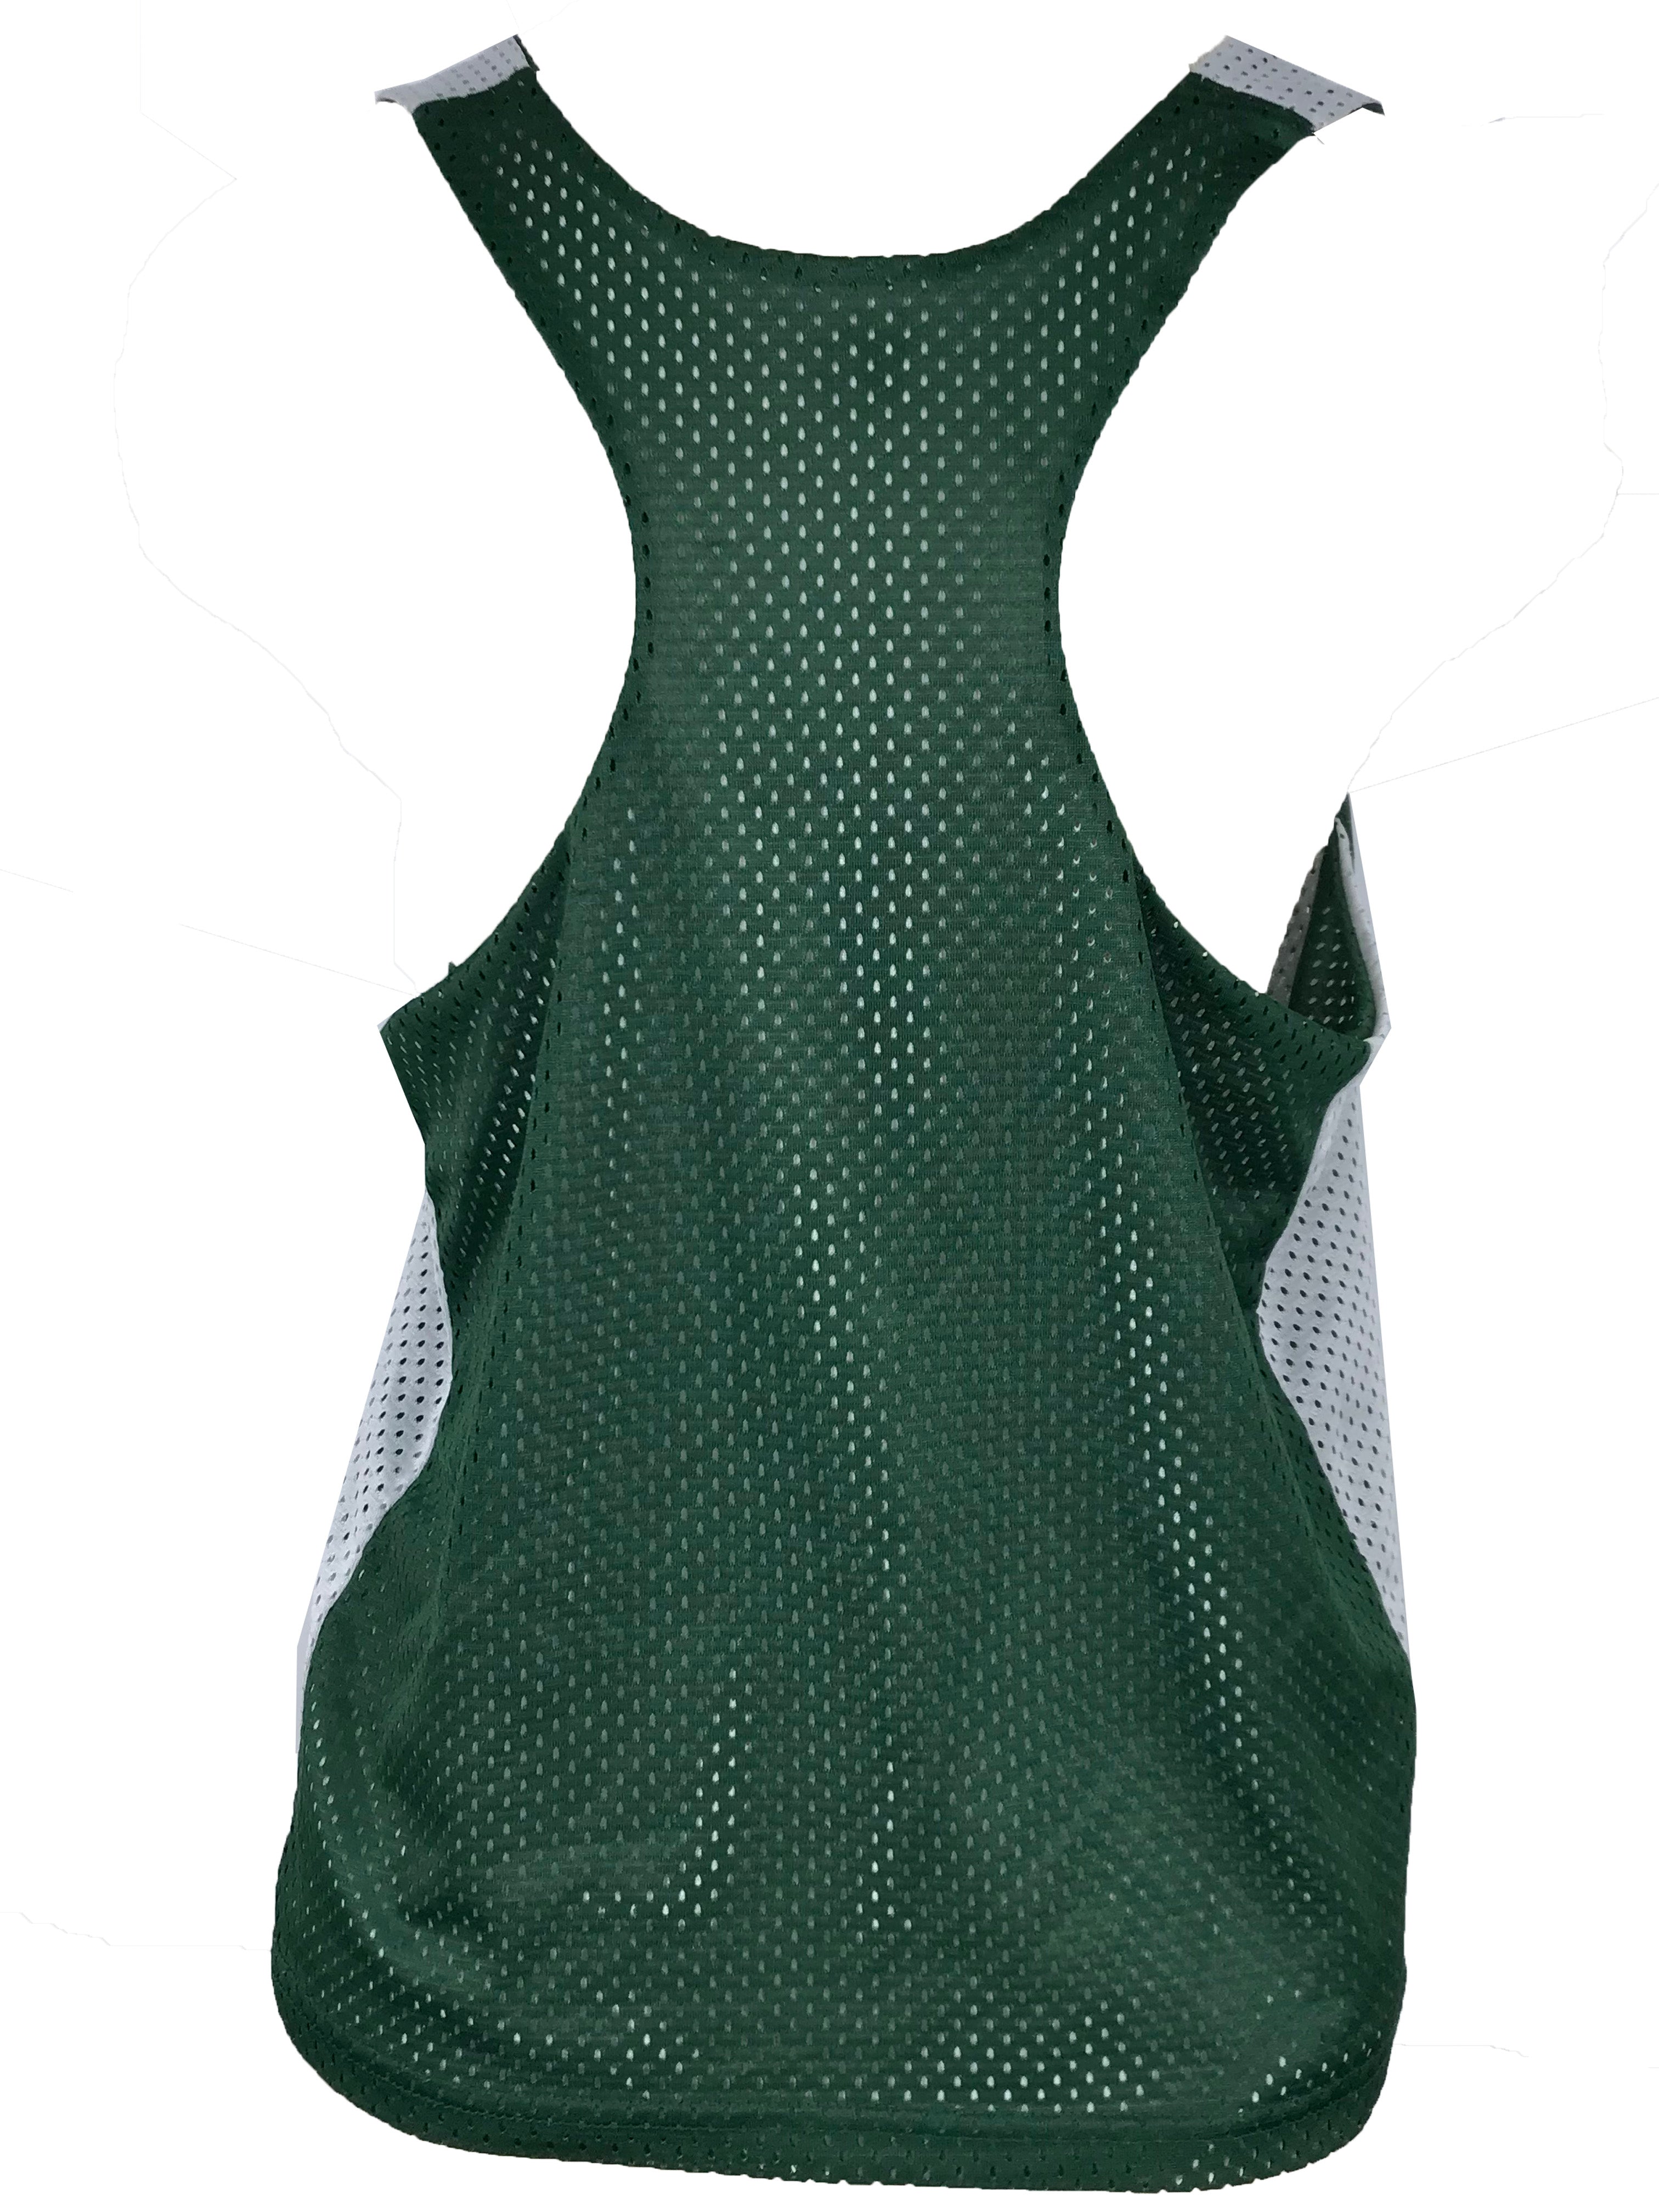 Nike Green & White Jersey Women's Size S/M